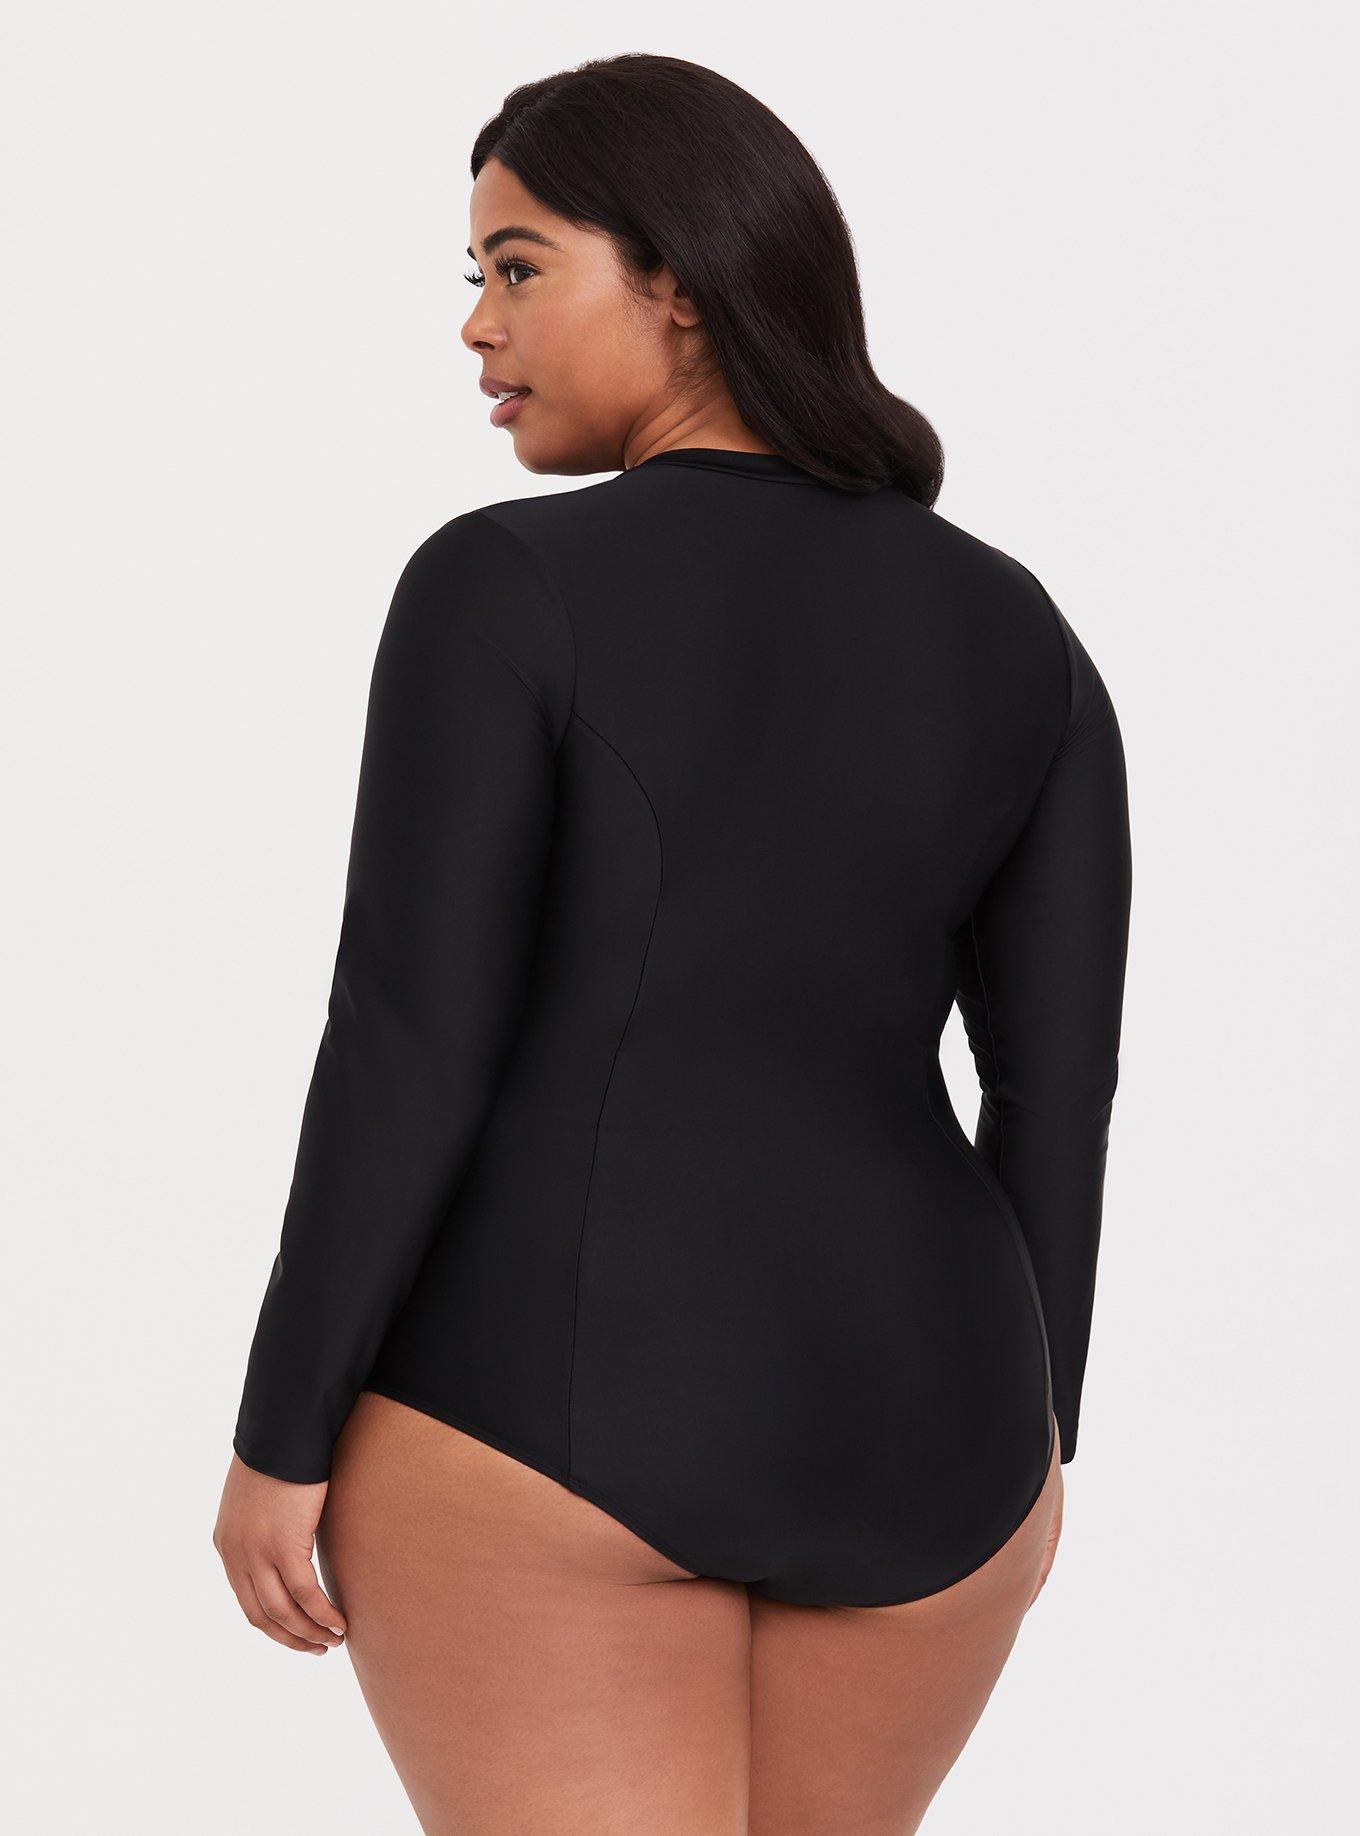  Womens Plus Size Rashguard Short Sleeve Black Swimsuit  Workout Bulit-in Bra Swim Shirt Rash Guard Shirt